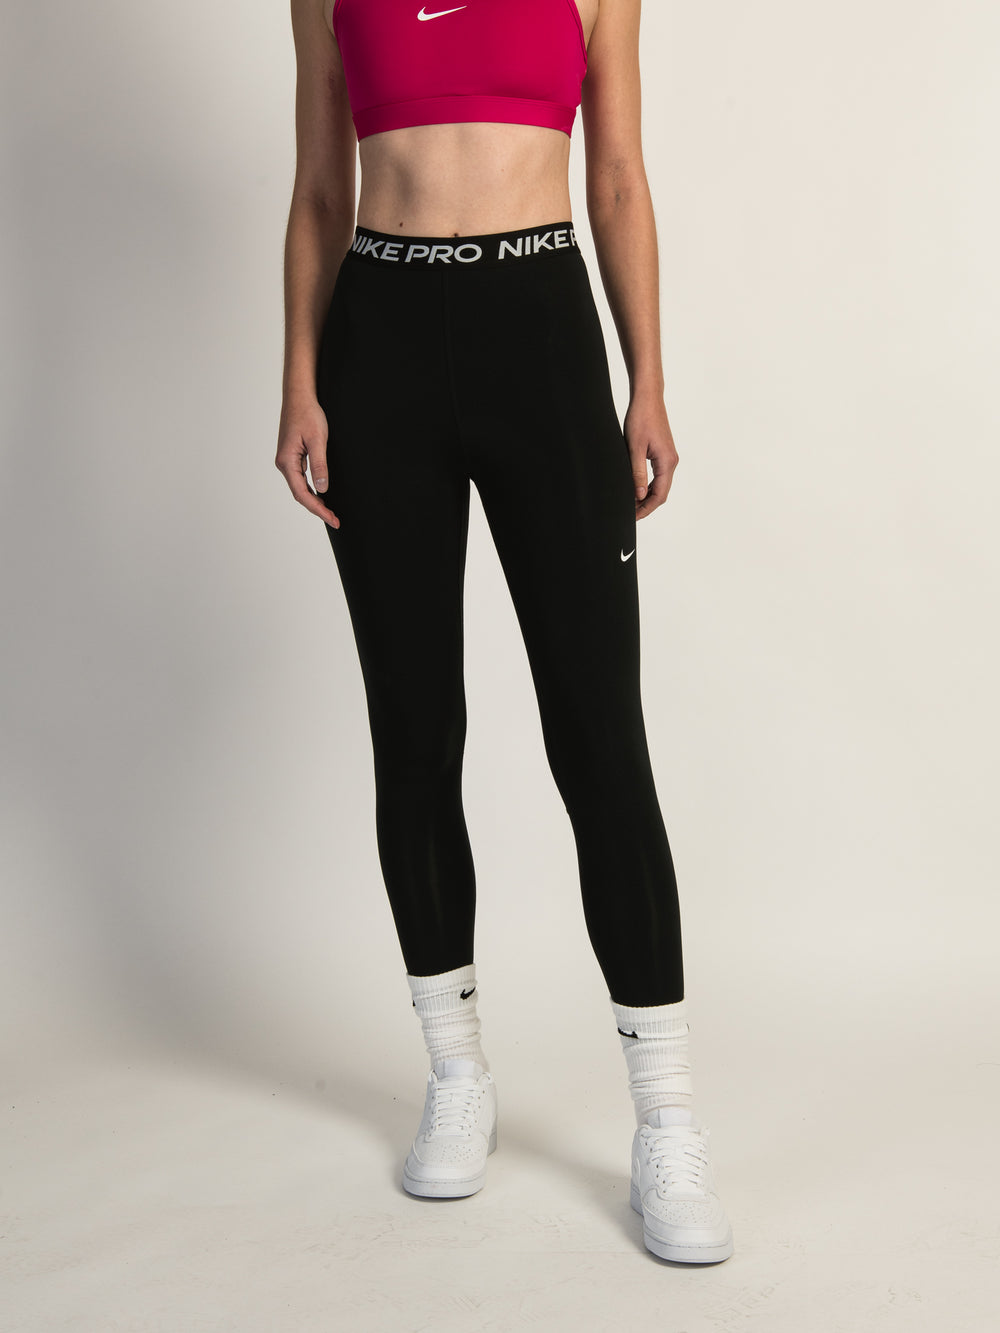 Buy Nike Pro 365 3/4 Tight Women Black, White online